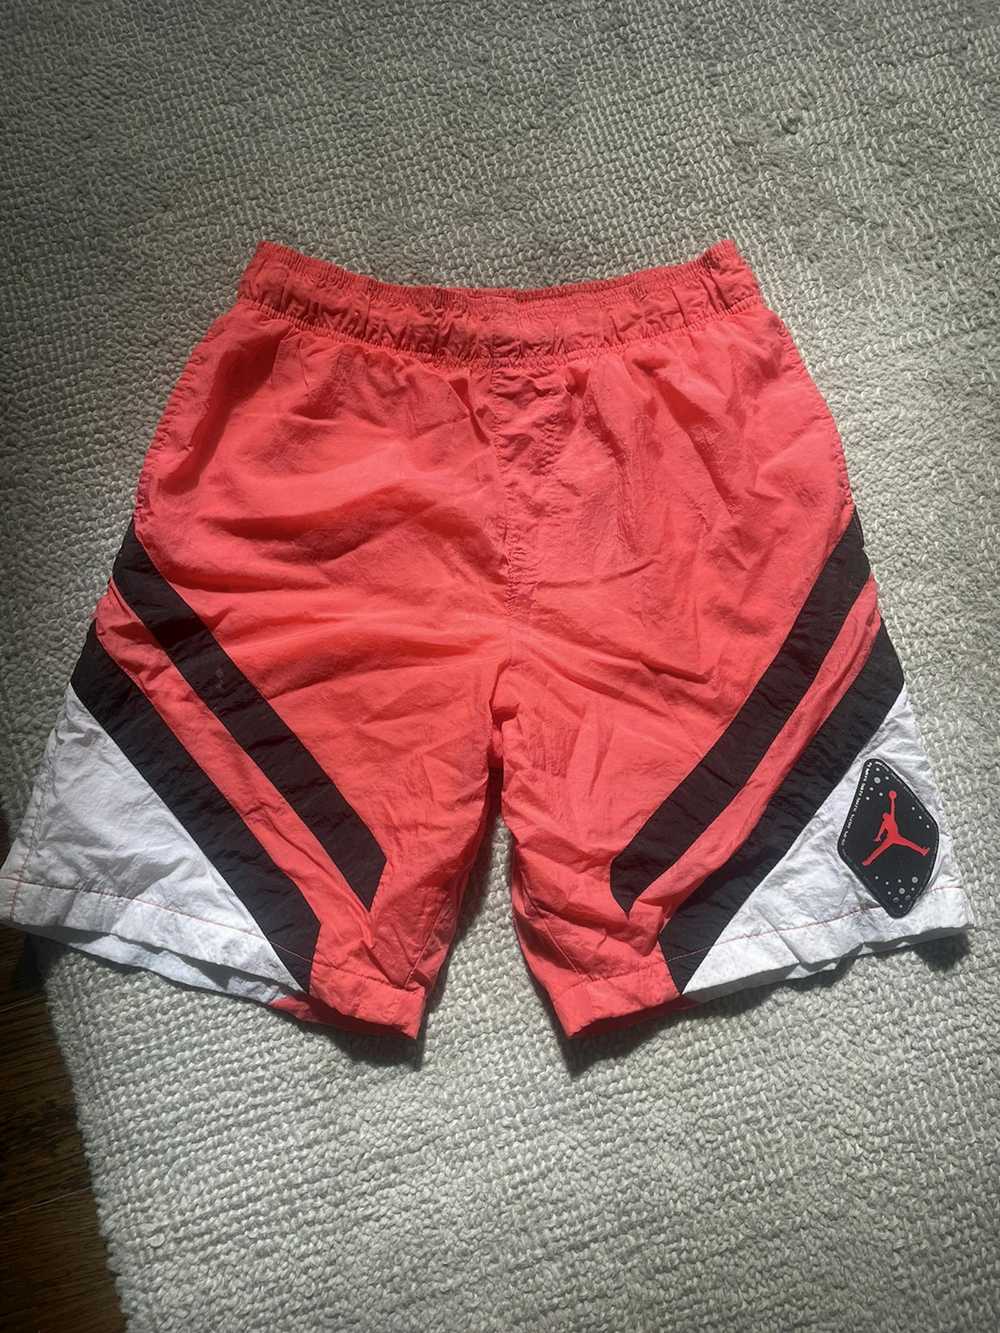 Jordan Brand Jordan 6 Infrared Shorts - image 1